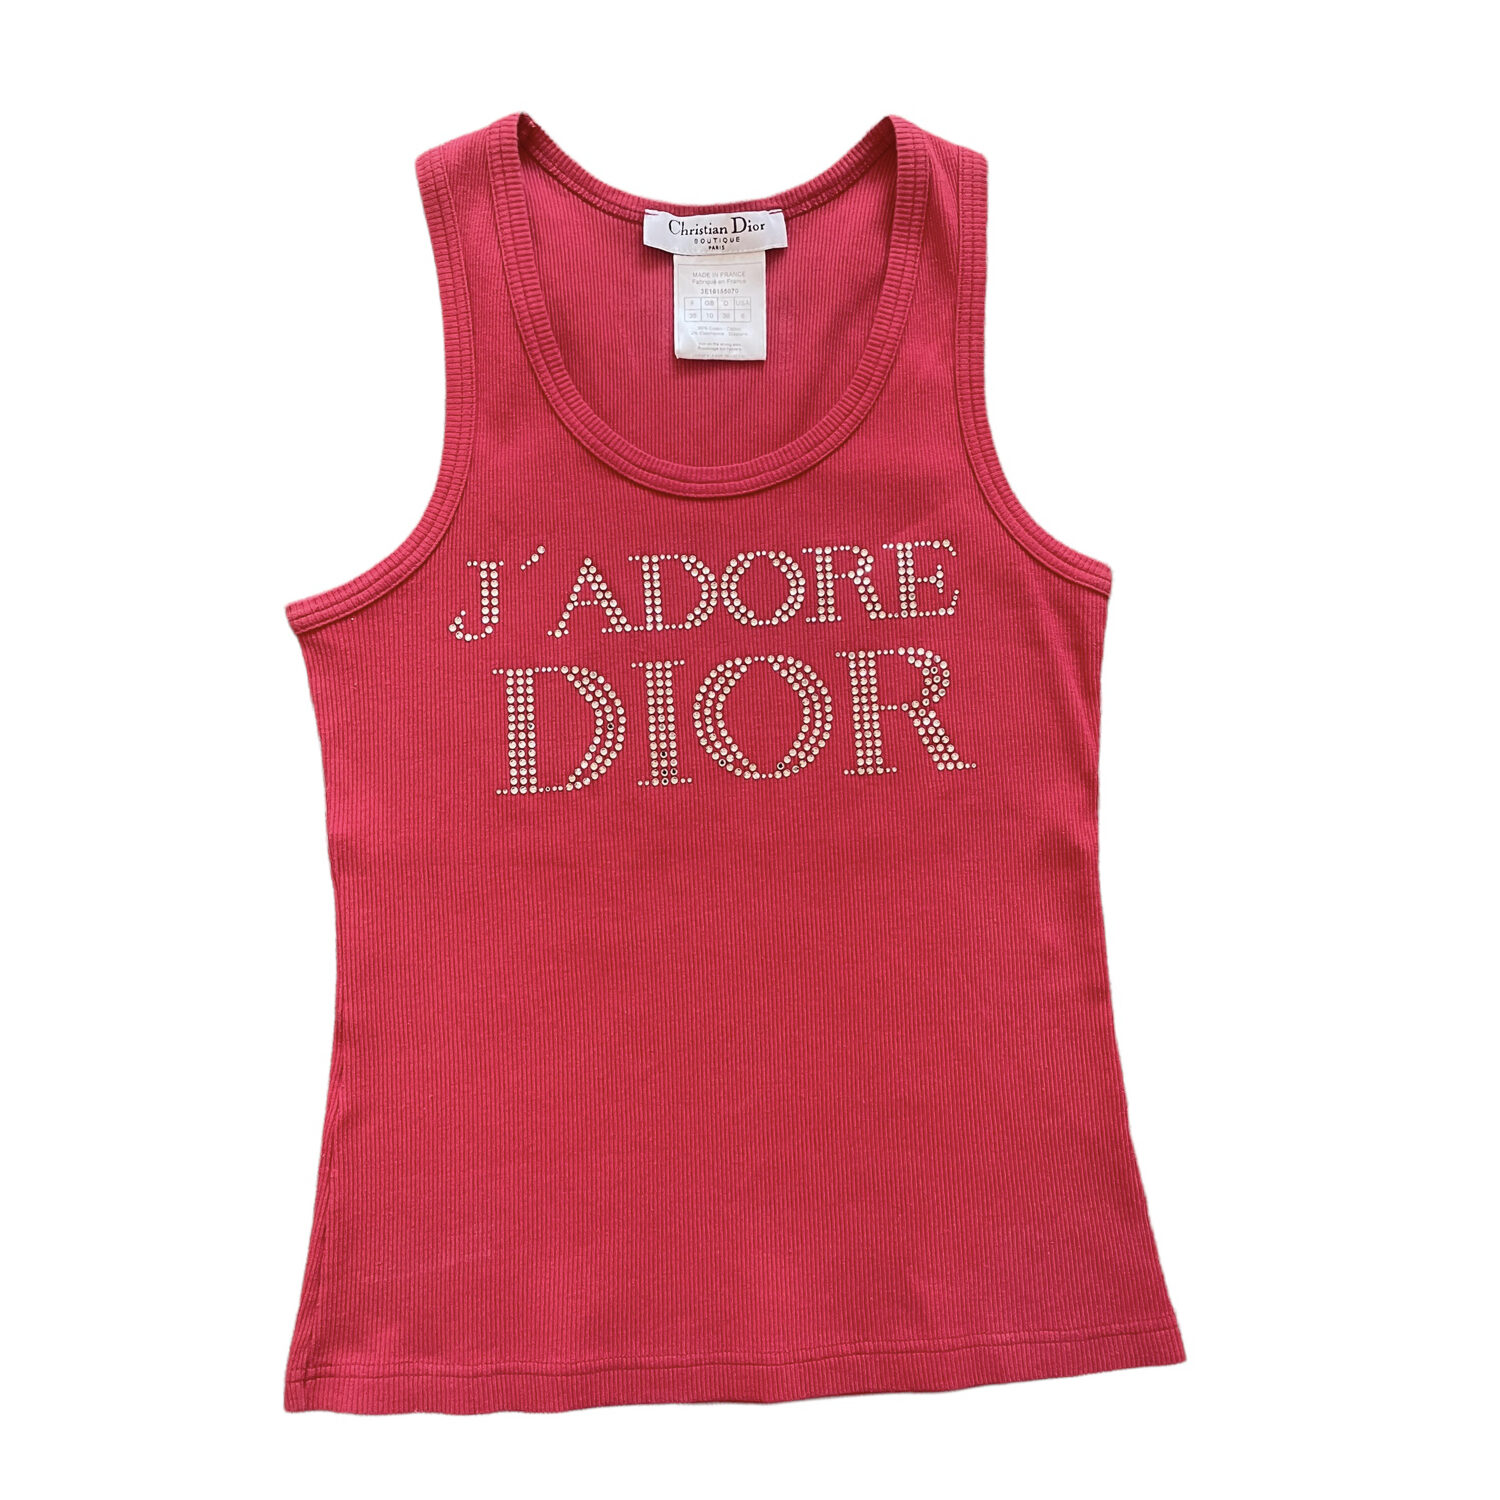 Vintage Dior J'Adore Diamante Vest Tank Top in Pink / Red | NITRYL